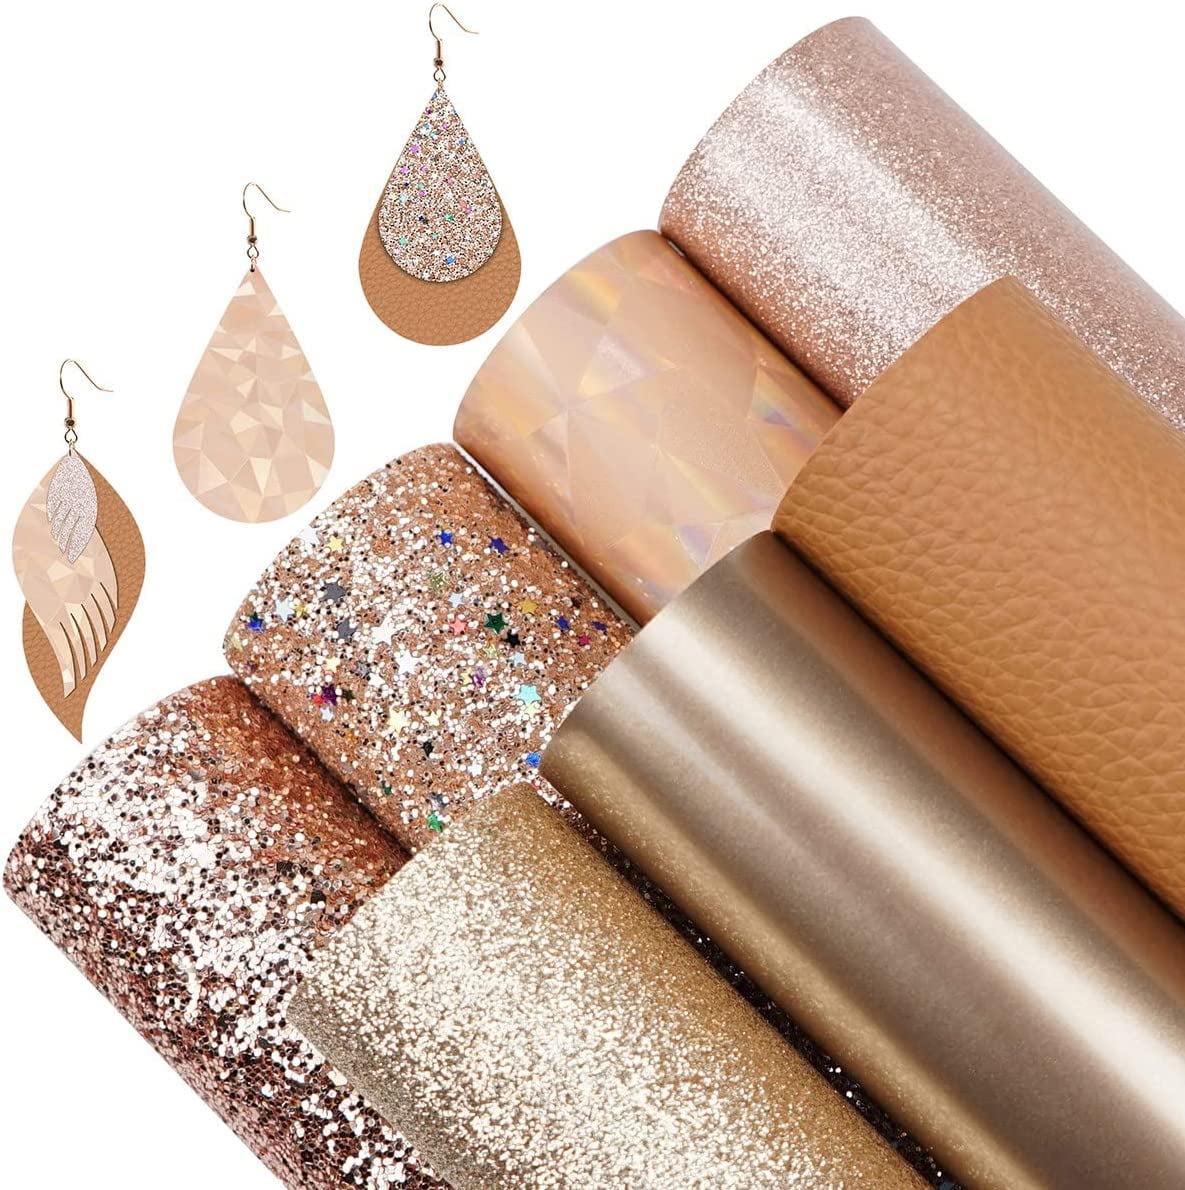 7pcs DIY Glitter Fabric